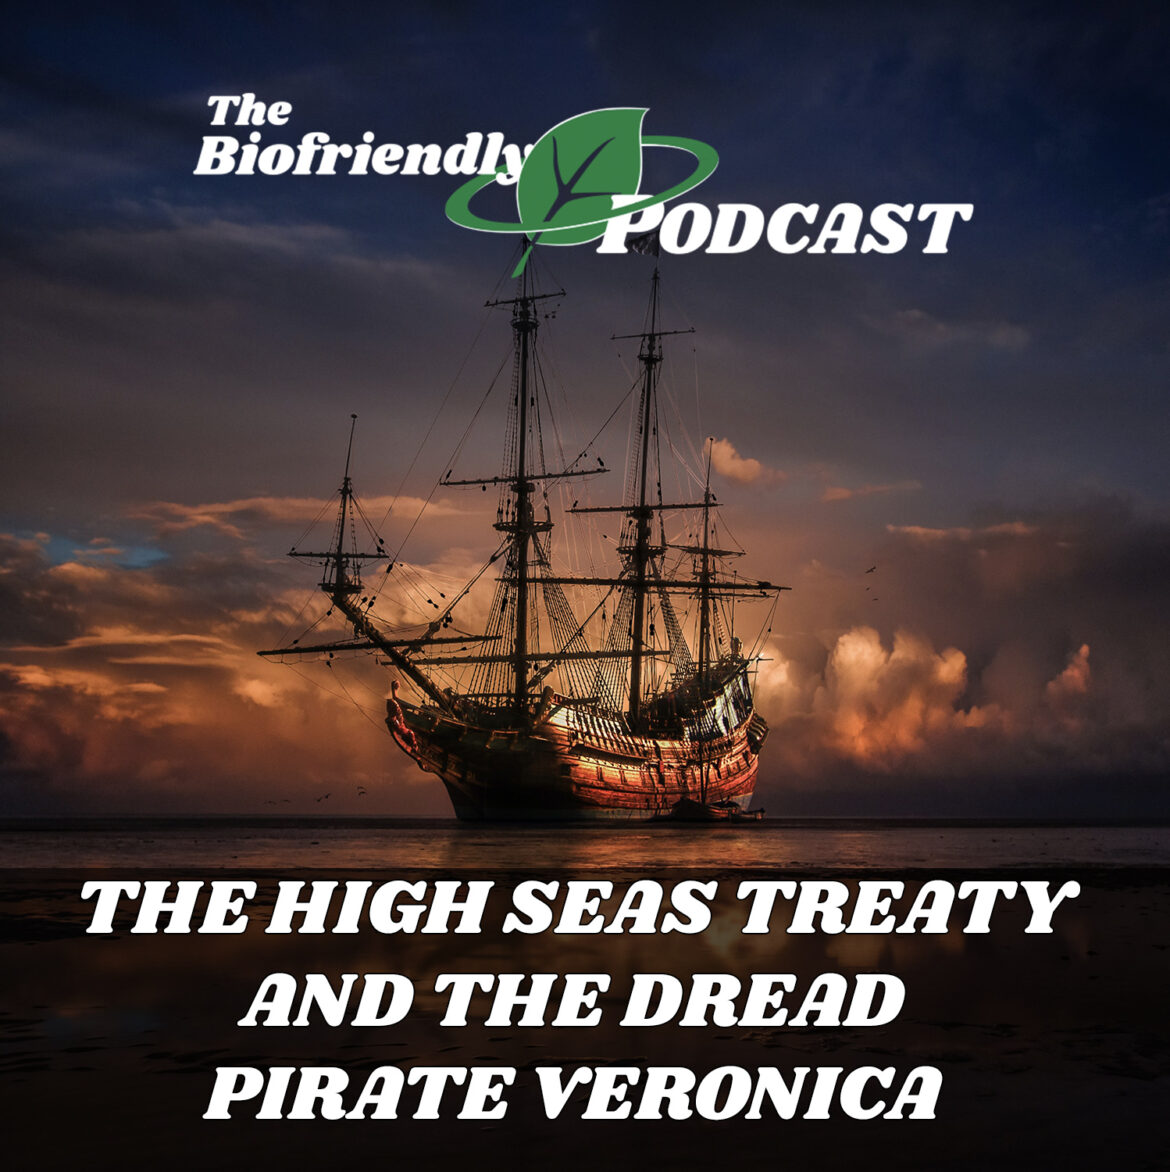 The High Seas Treaty and the Dread Pirate Veronica